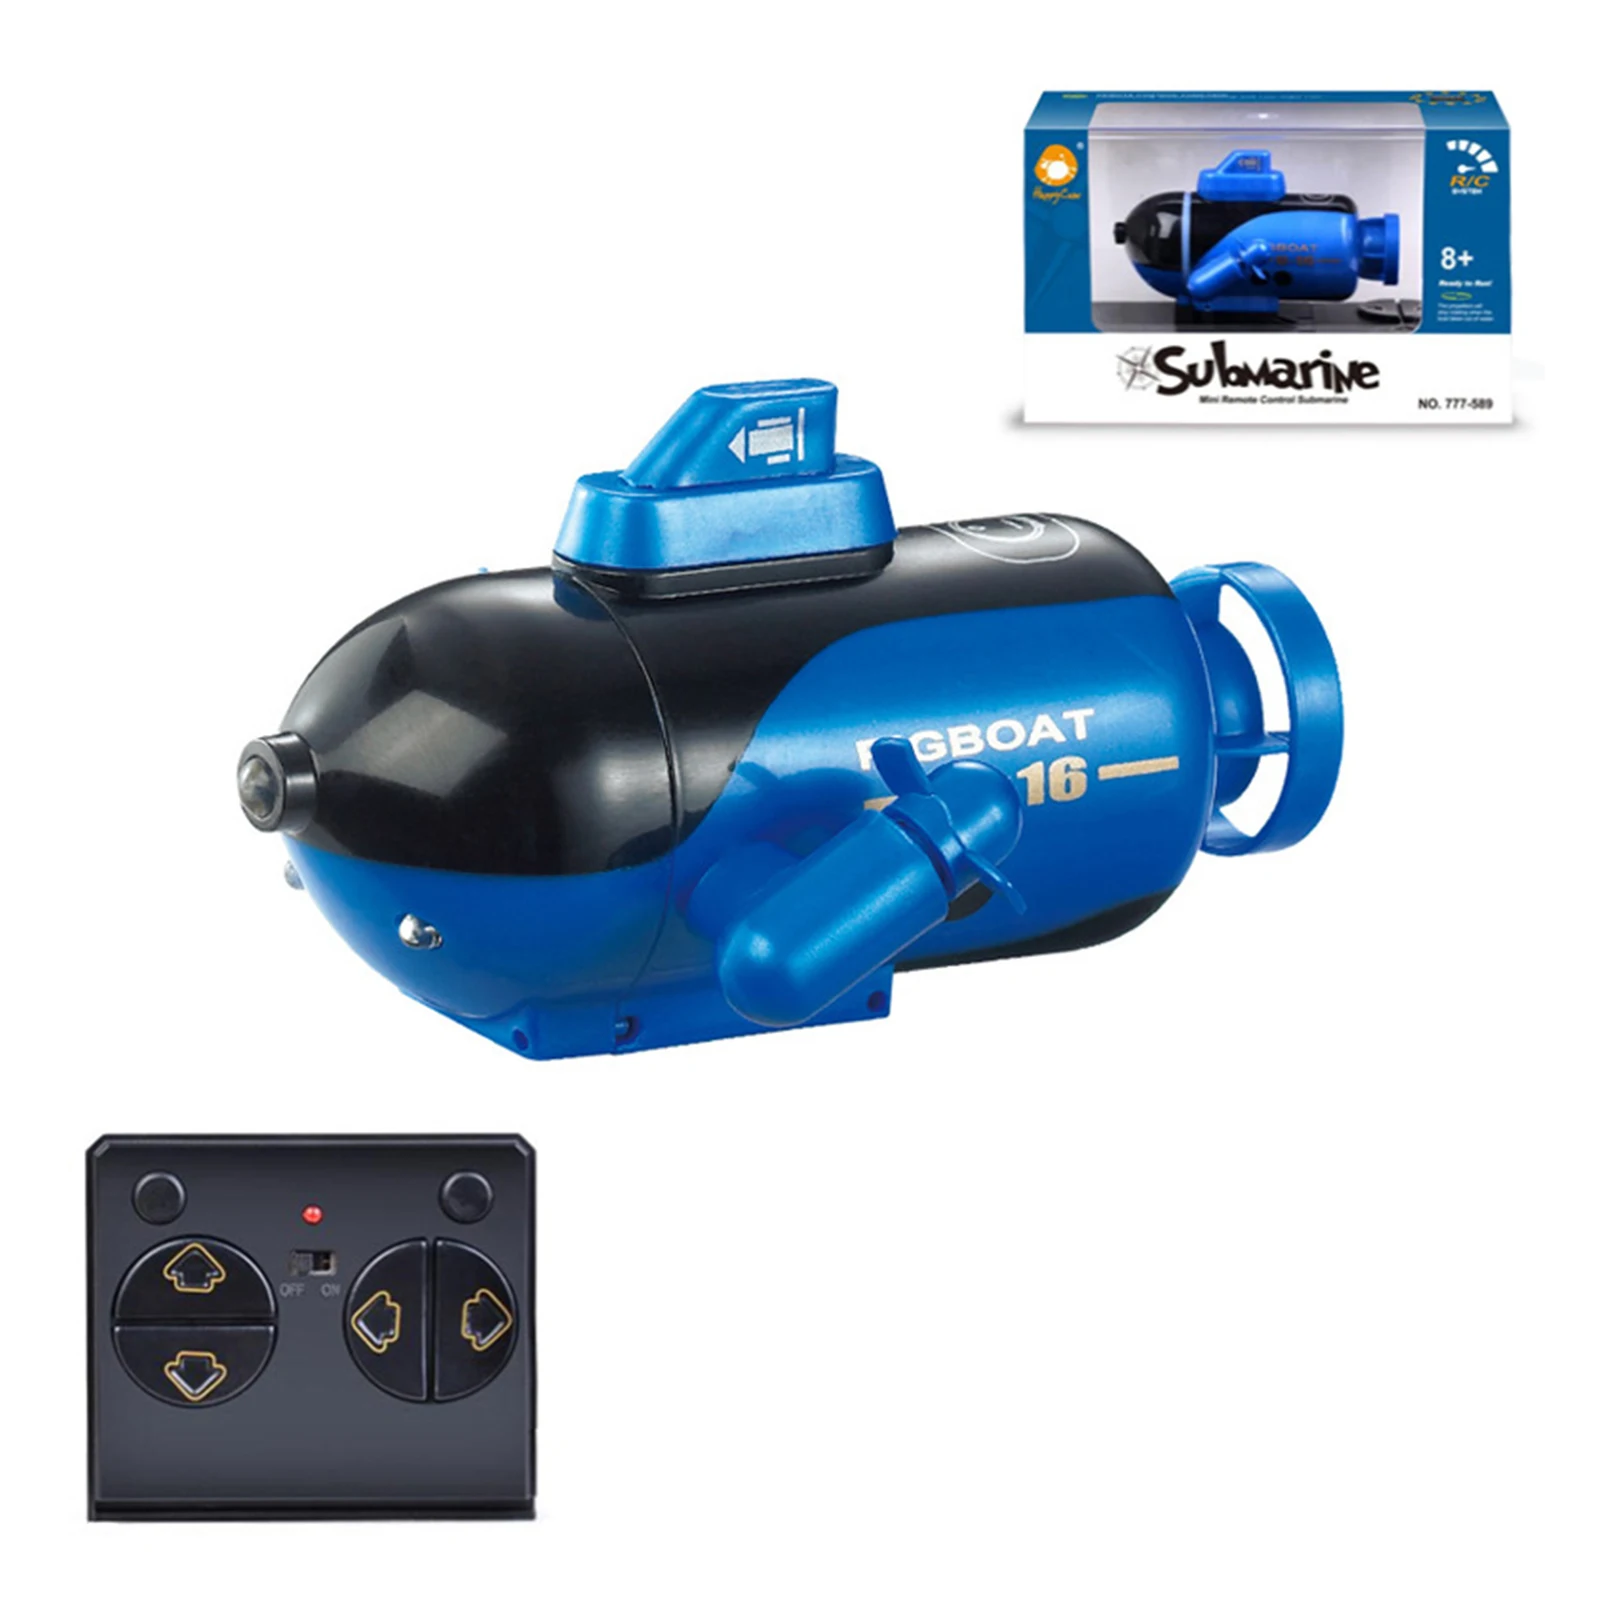 

RC Submarine Mini Radio Racing Remote Control Boat Ship RC Toy Induction Simulation Bathtub Pools Lakes Fishing Boat Kids Gift